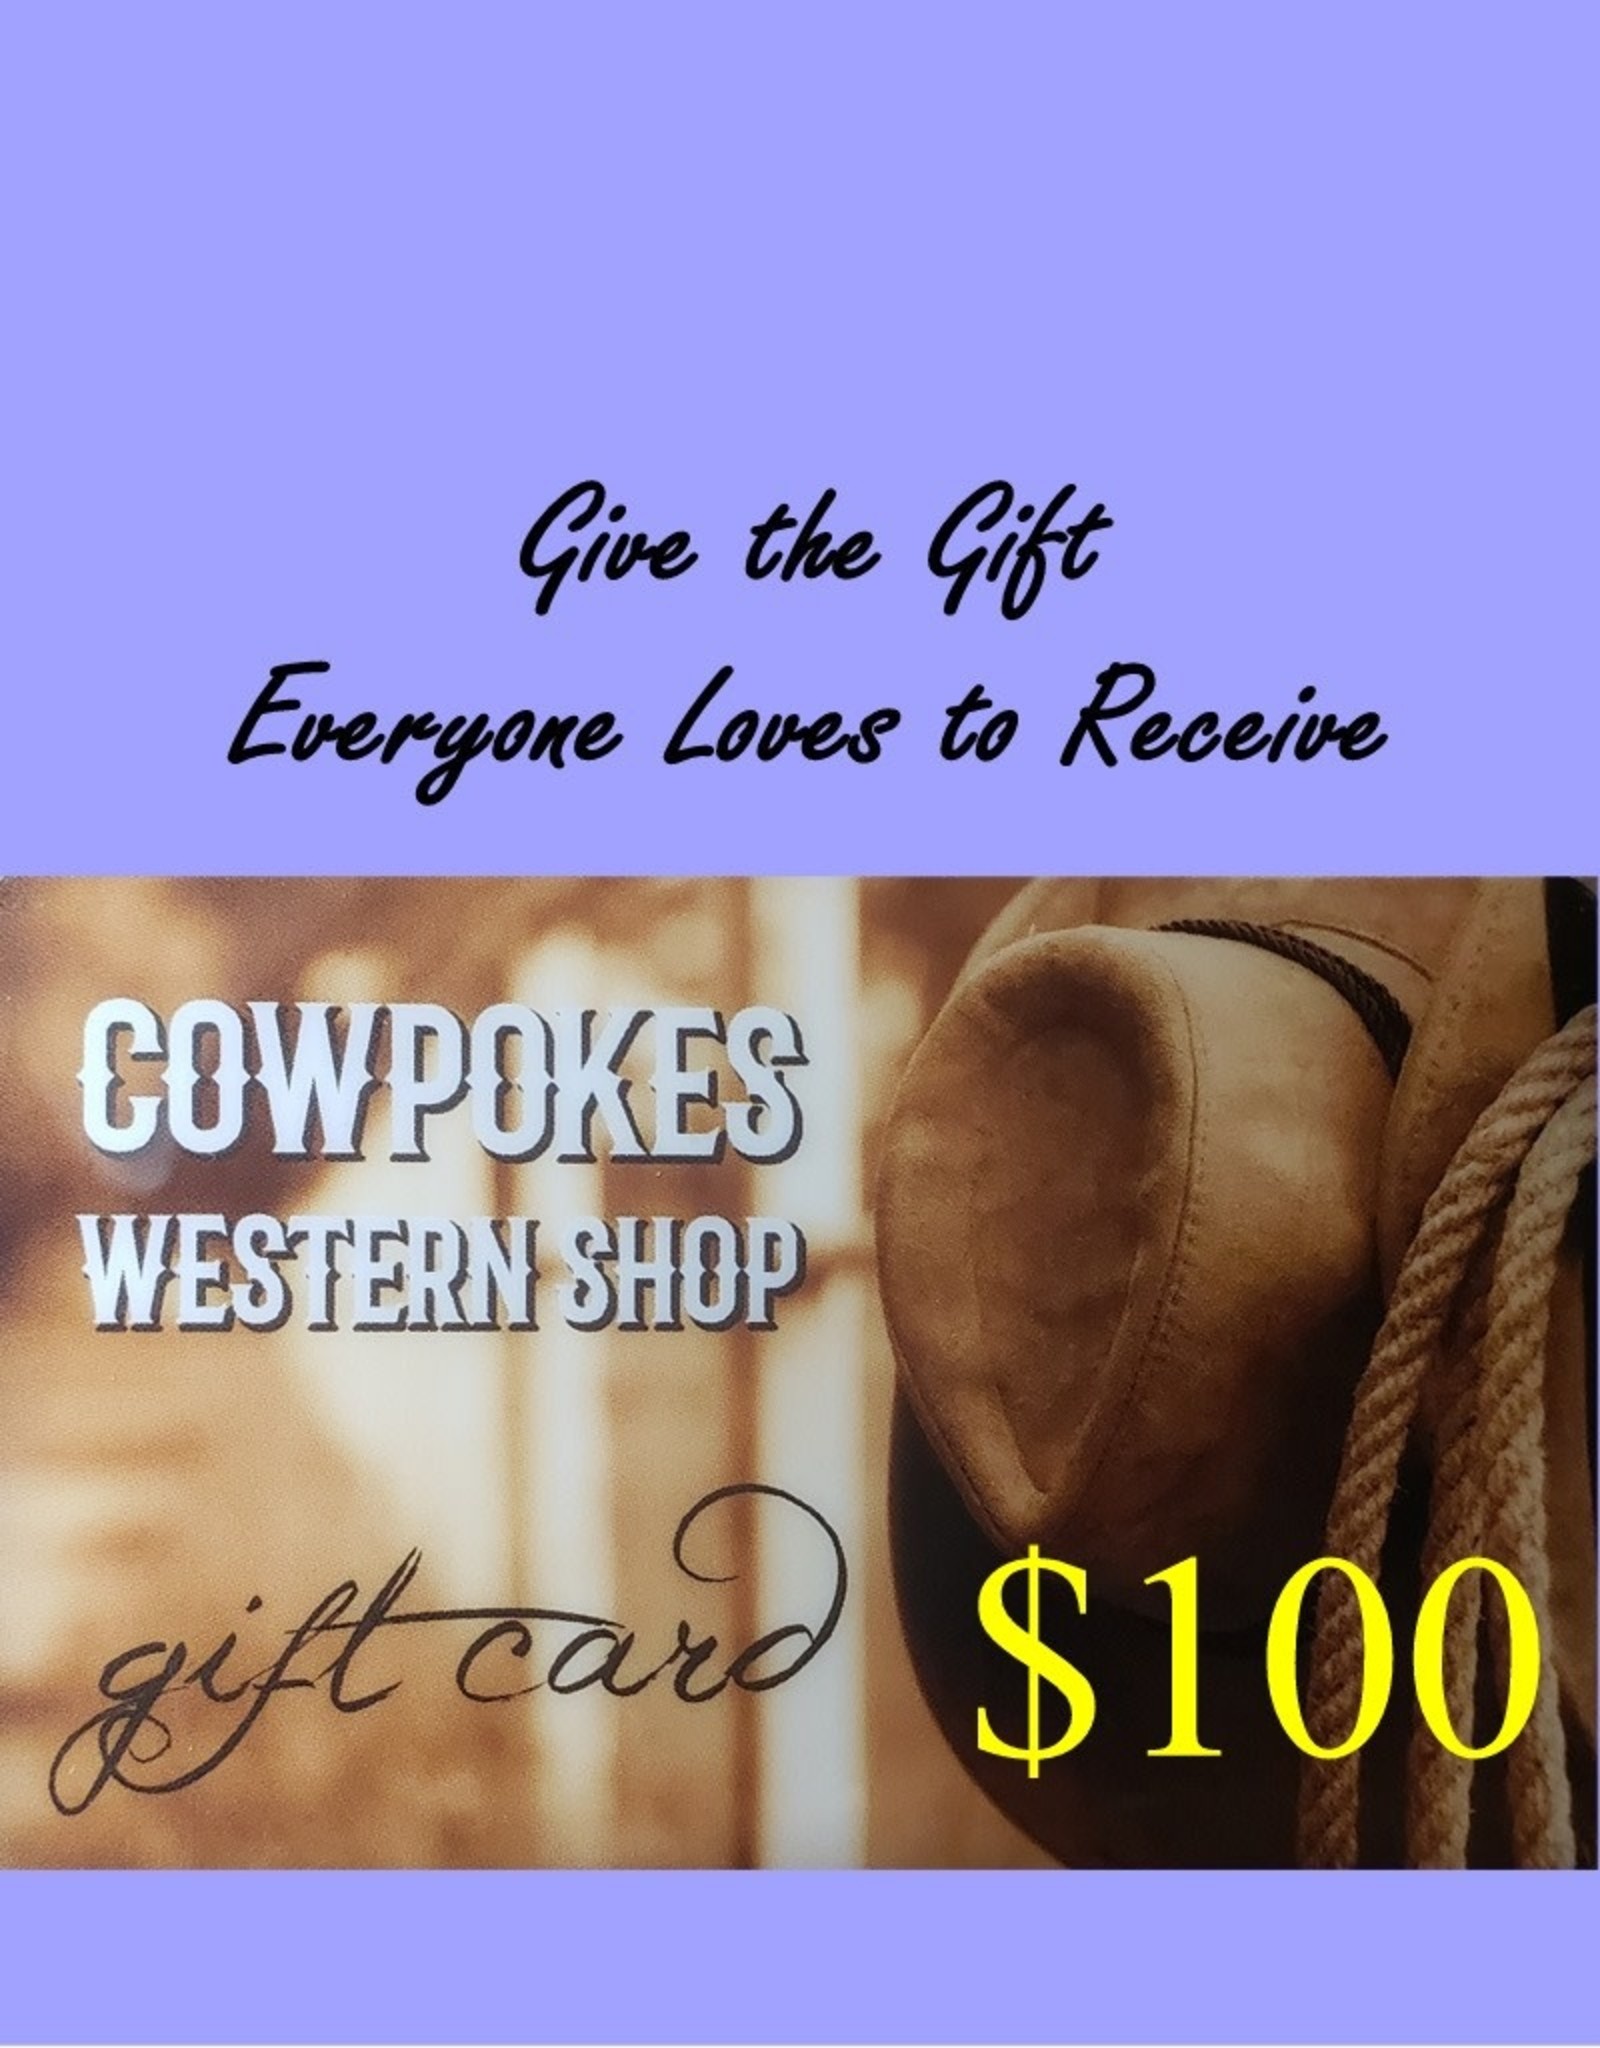 Cowpokes Western Shop Gift Card $100 - Cowpokes Western Shop